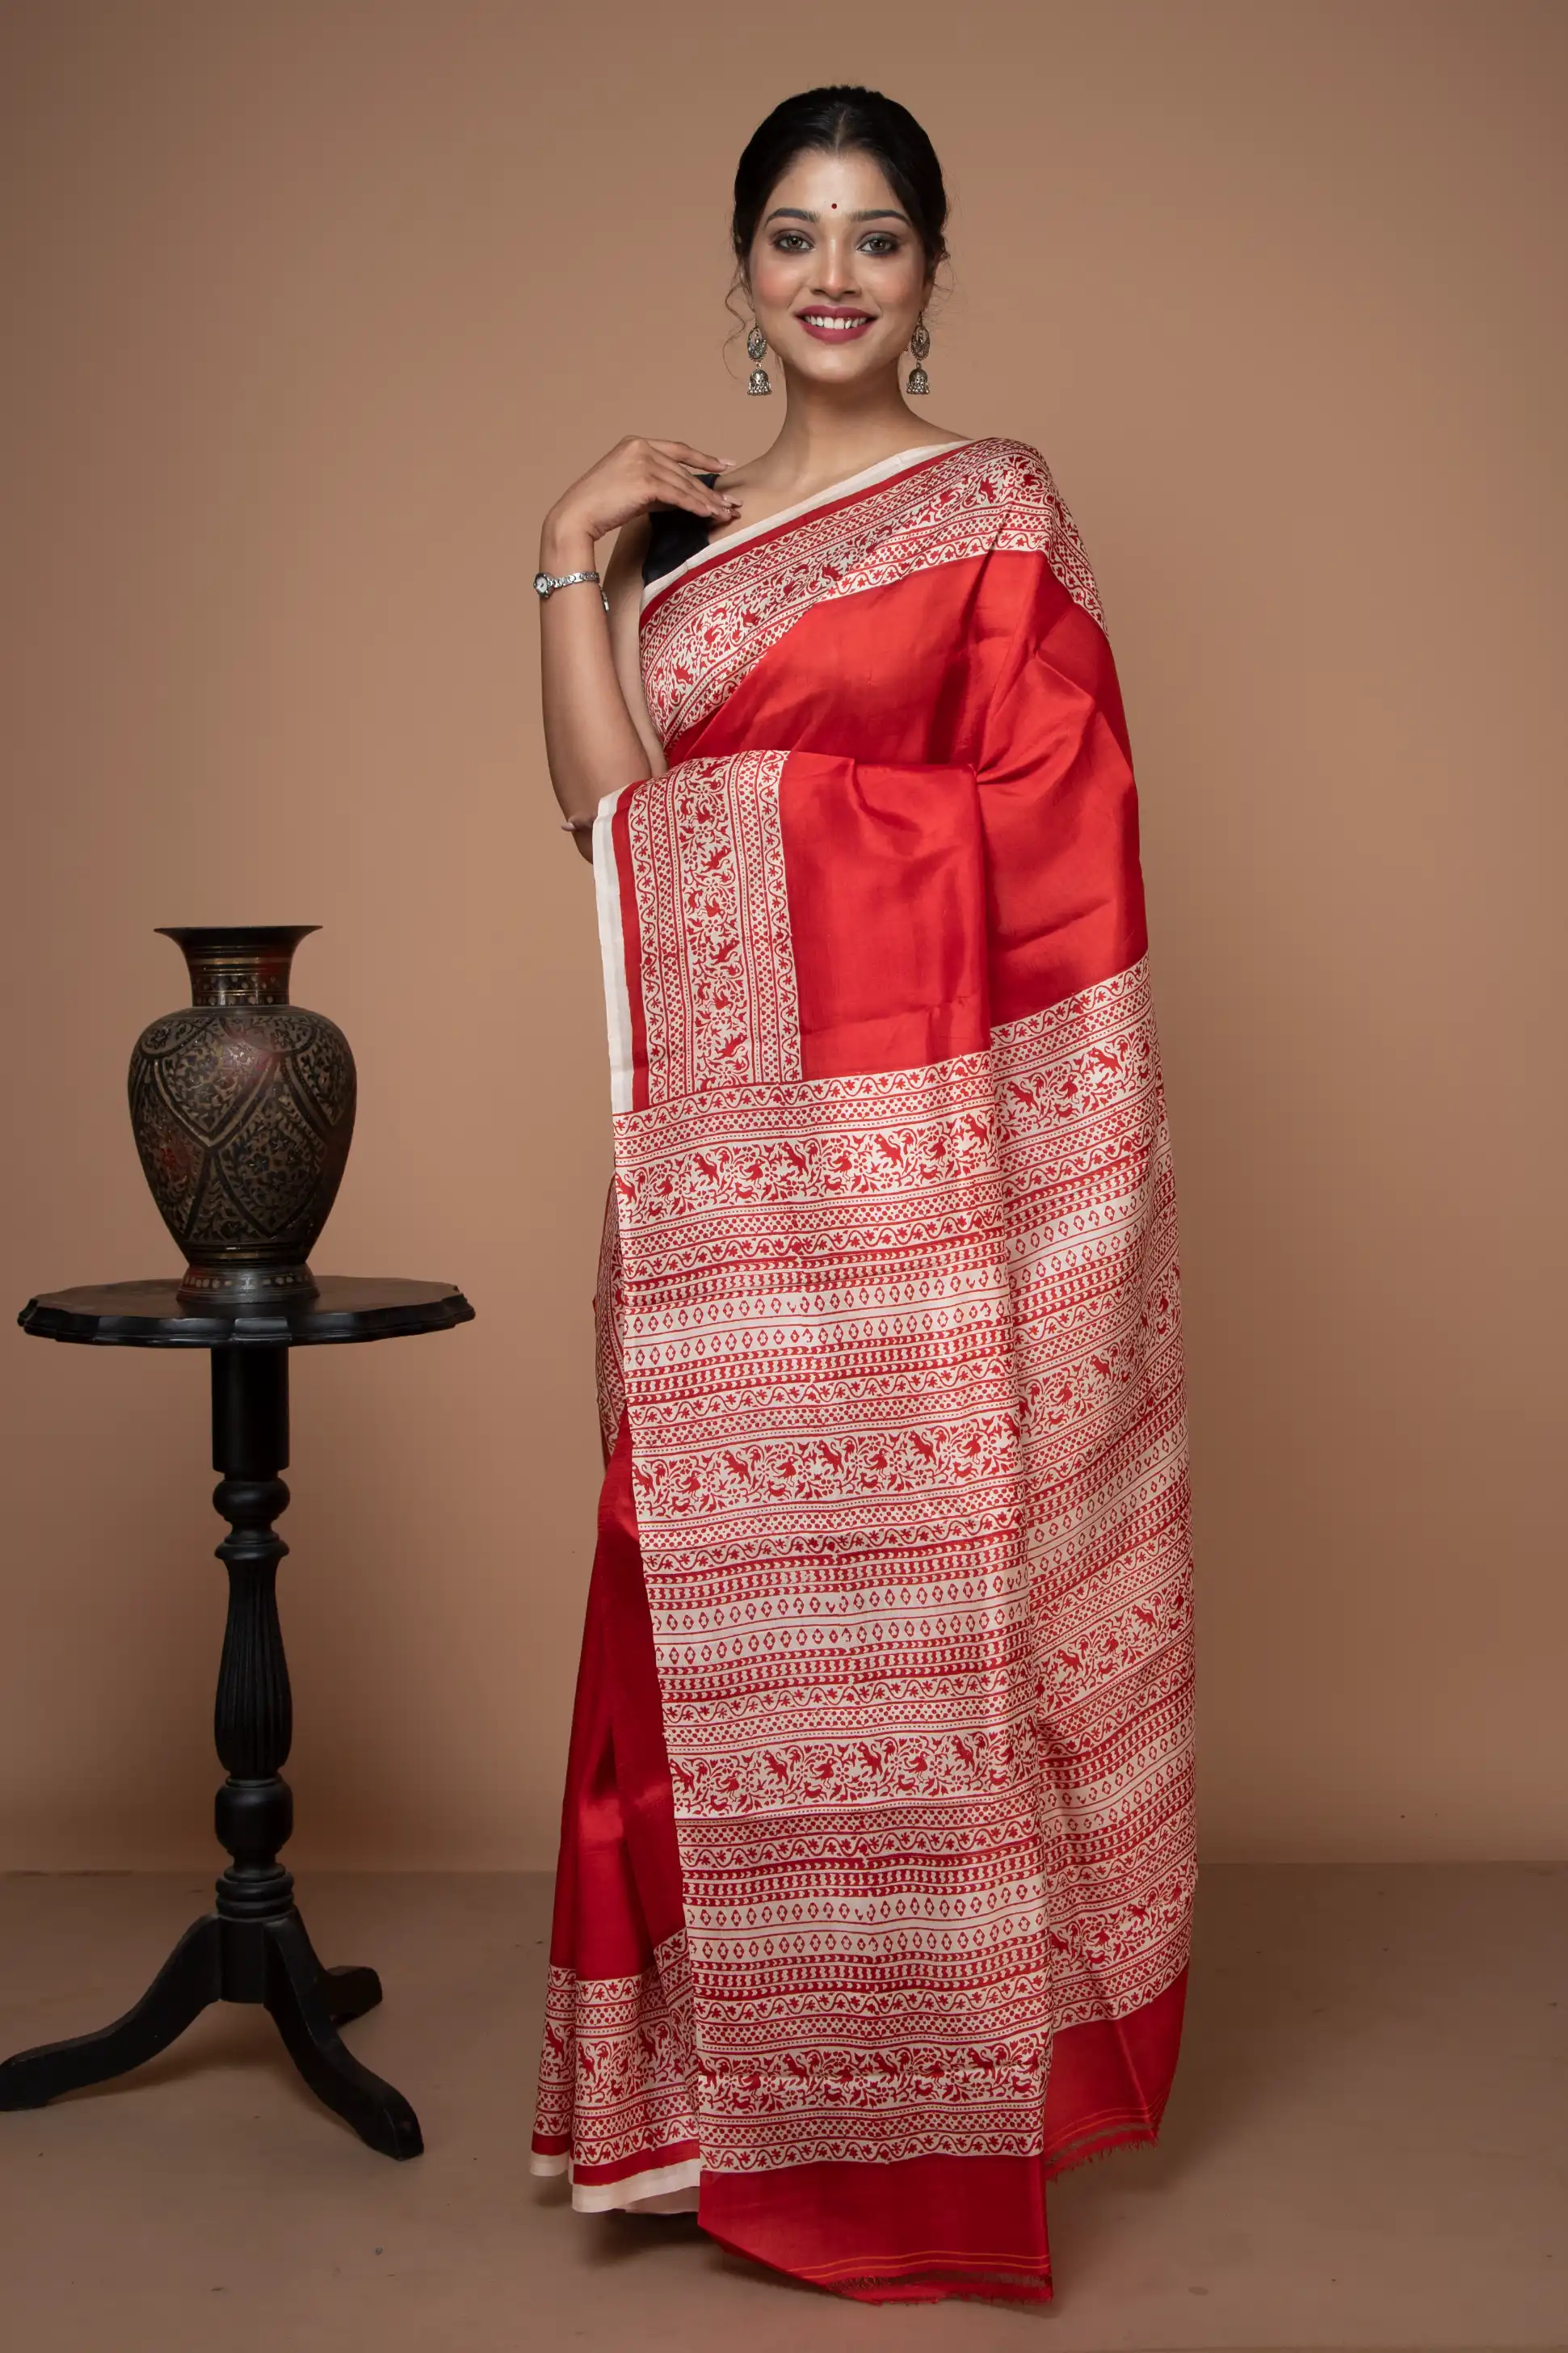 Buy the most beautiful red and white saree from Ramdhanu Ethnic-1 -Ramdhanu Ethnic